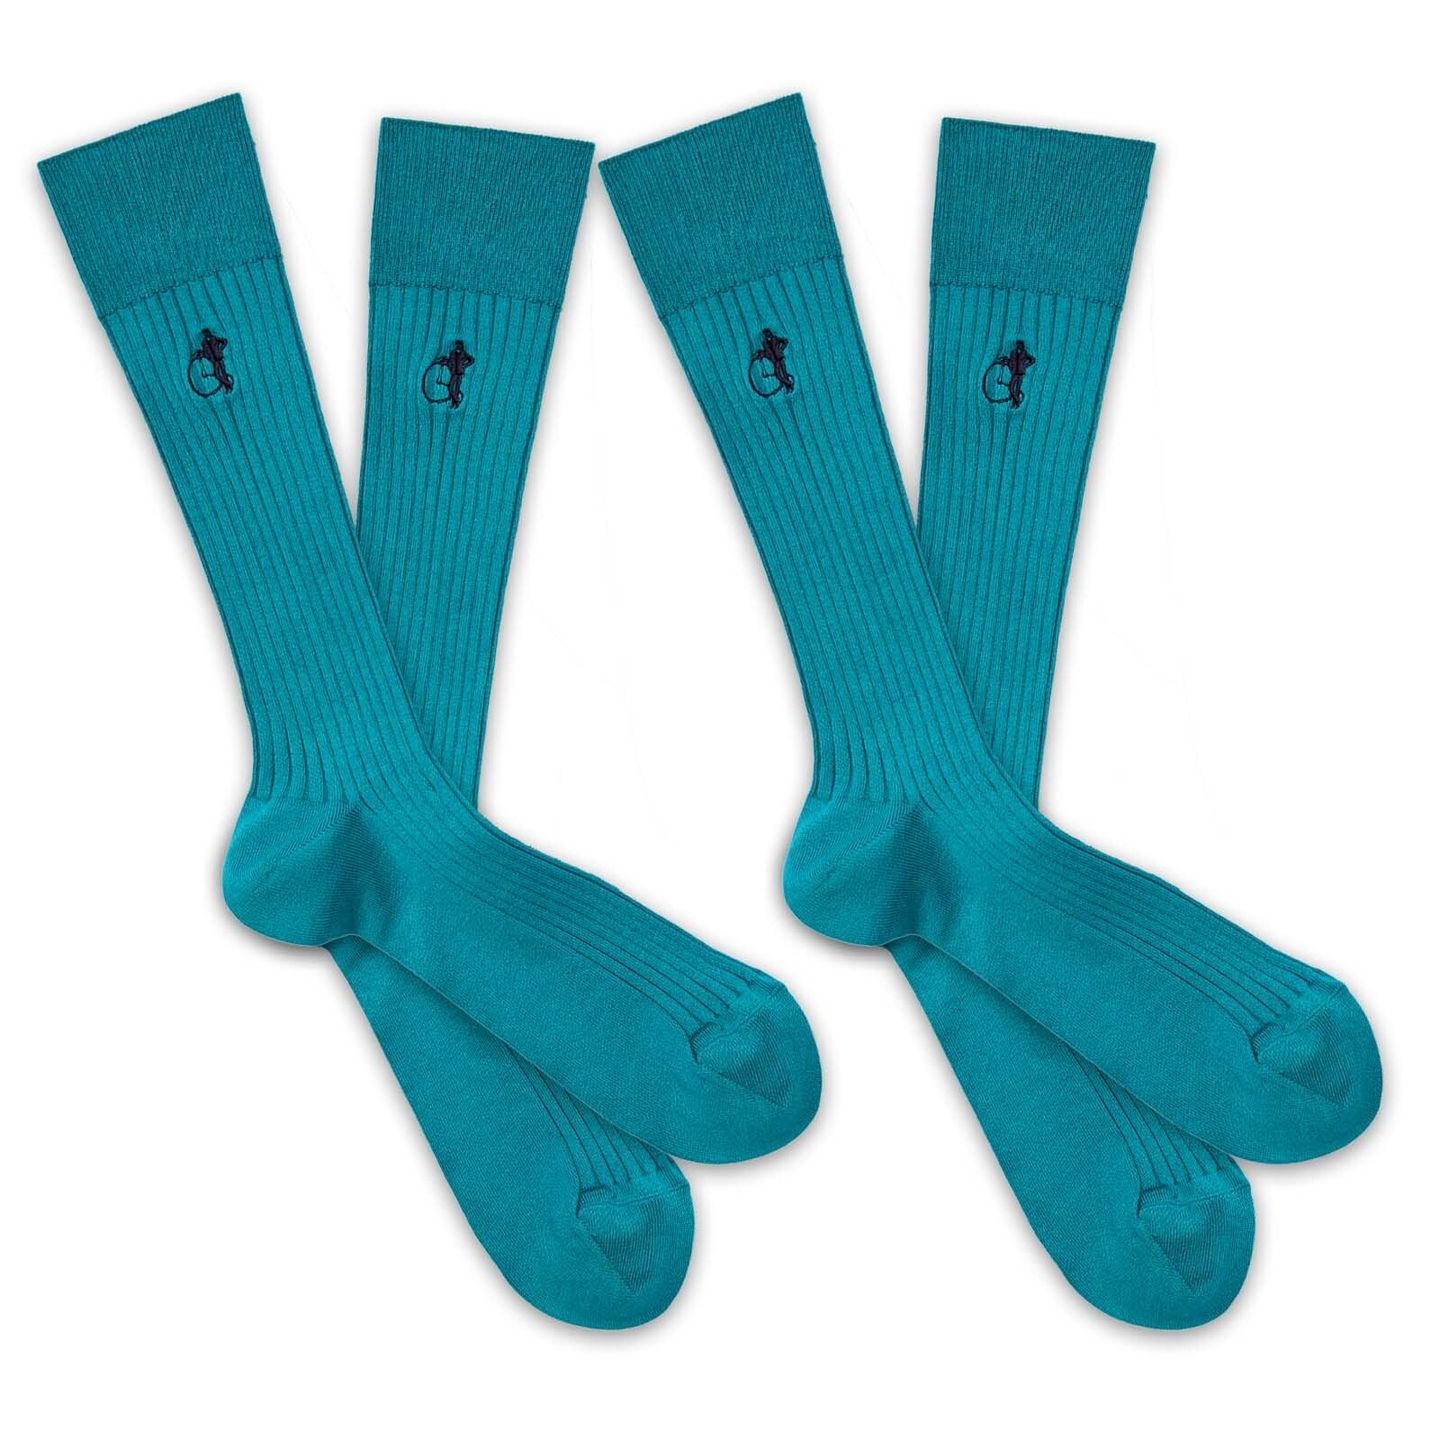 2 pair simply sartorial ocean blue socks